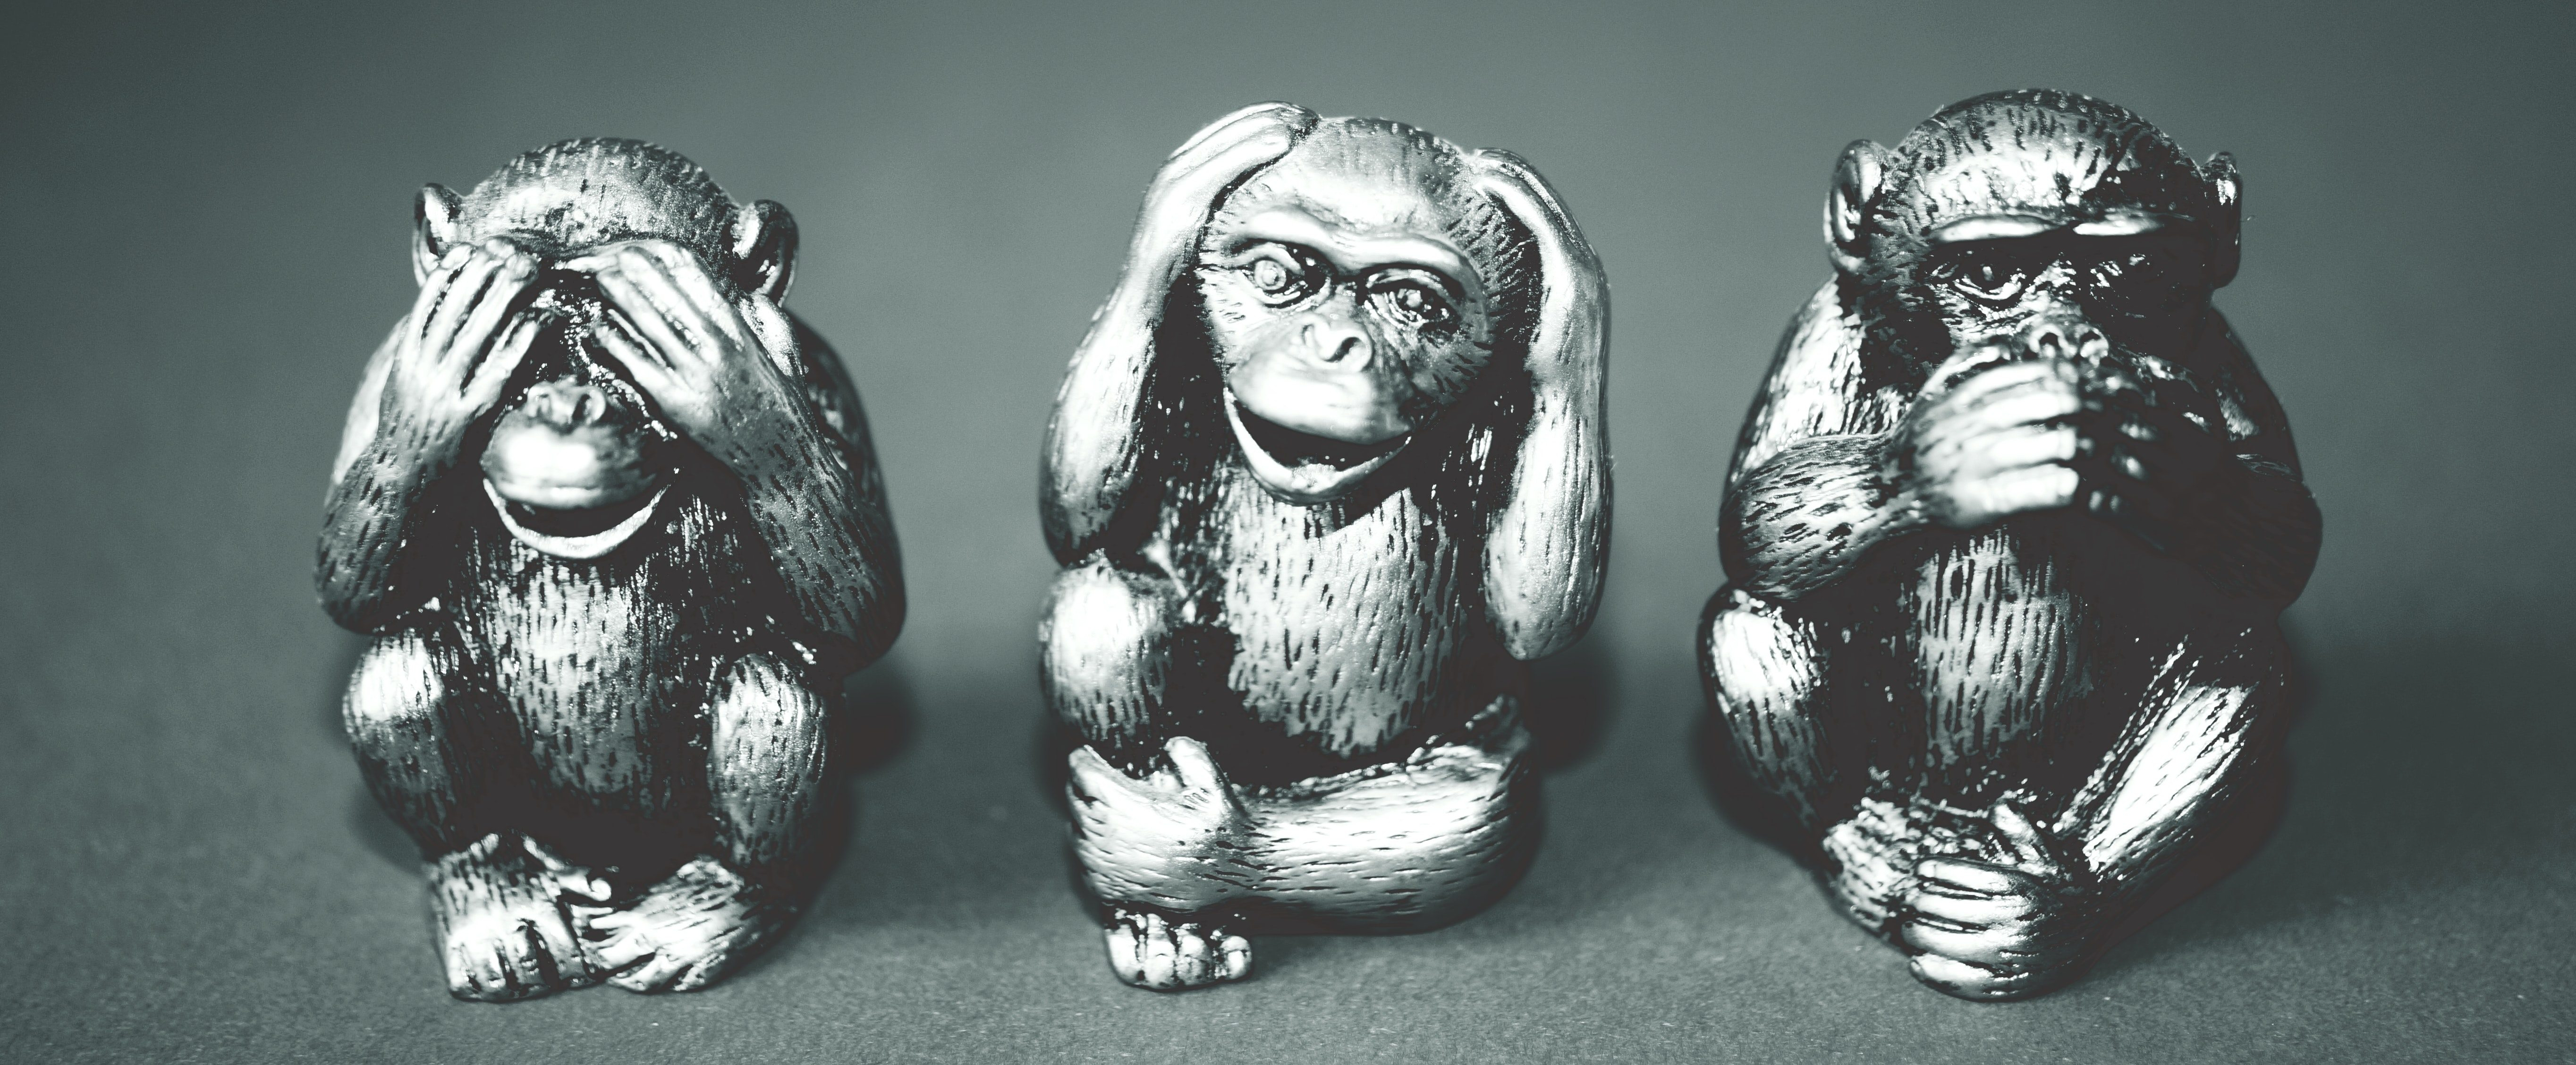 3 monkeys. See no evil. Hear no evil. Say no evil.